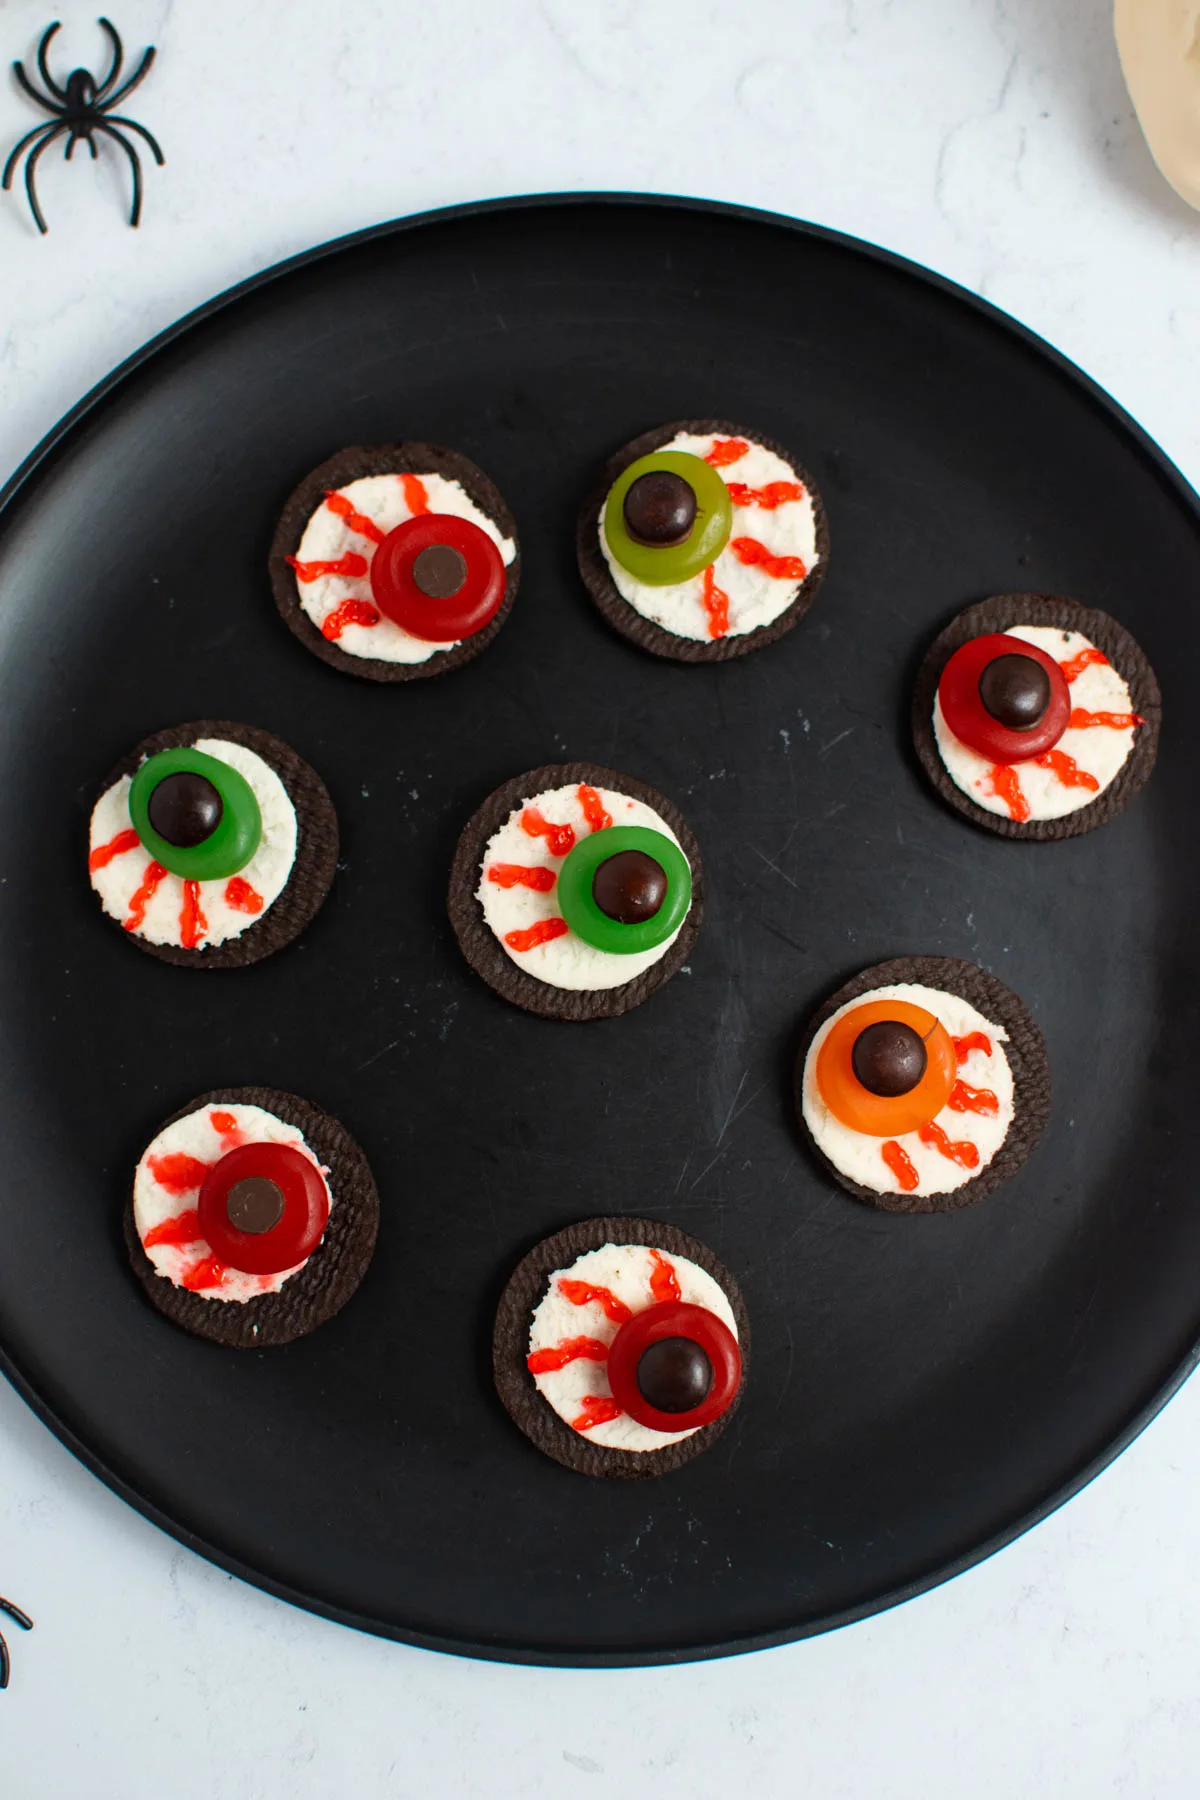 Oreo cookie eyeballs with M&M's on black plate.